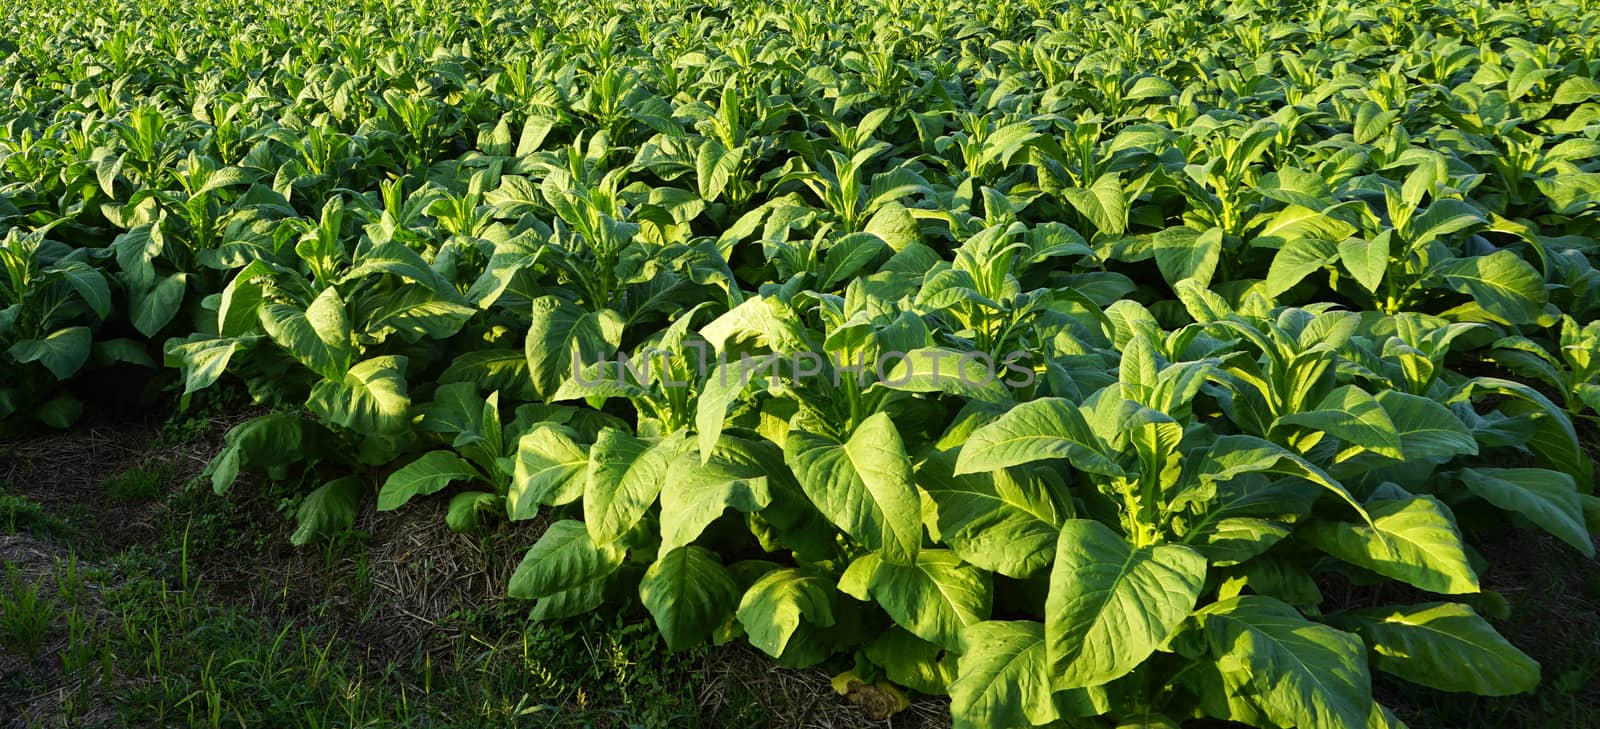 Tobacco farm agriculture harvest horizontal by polarbearstudio